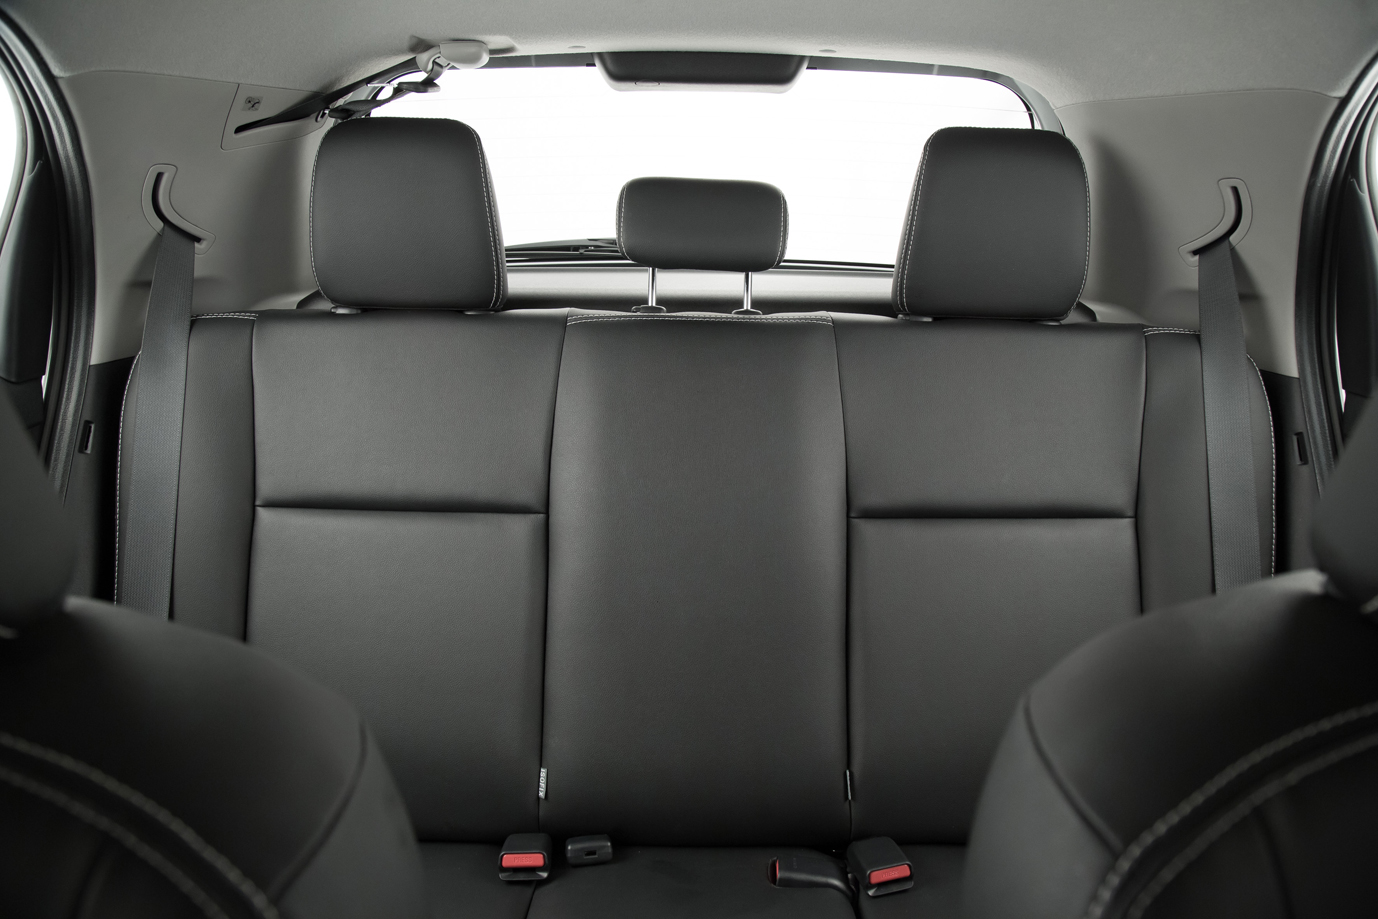 Toyota, Toyota Etios Facelift Rear Seat: Toyota Etios Facelift Diluncurkan Dengan Ubahan Fokus Pada Interior